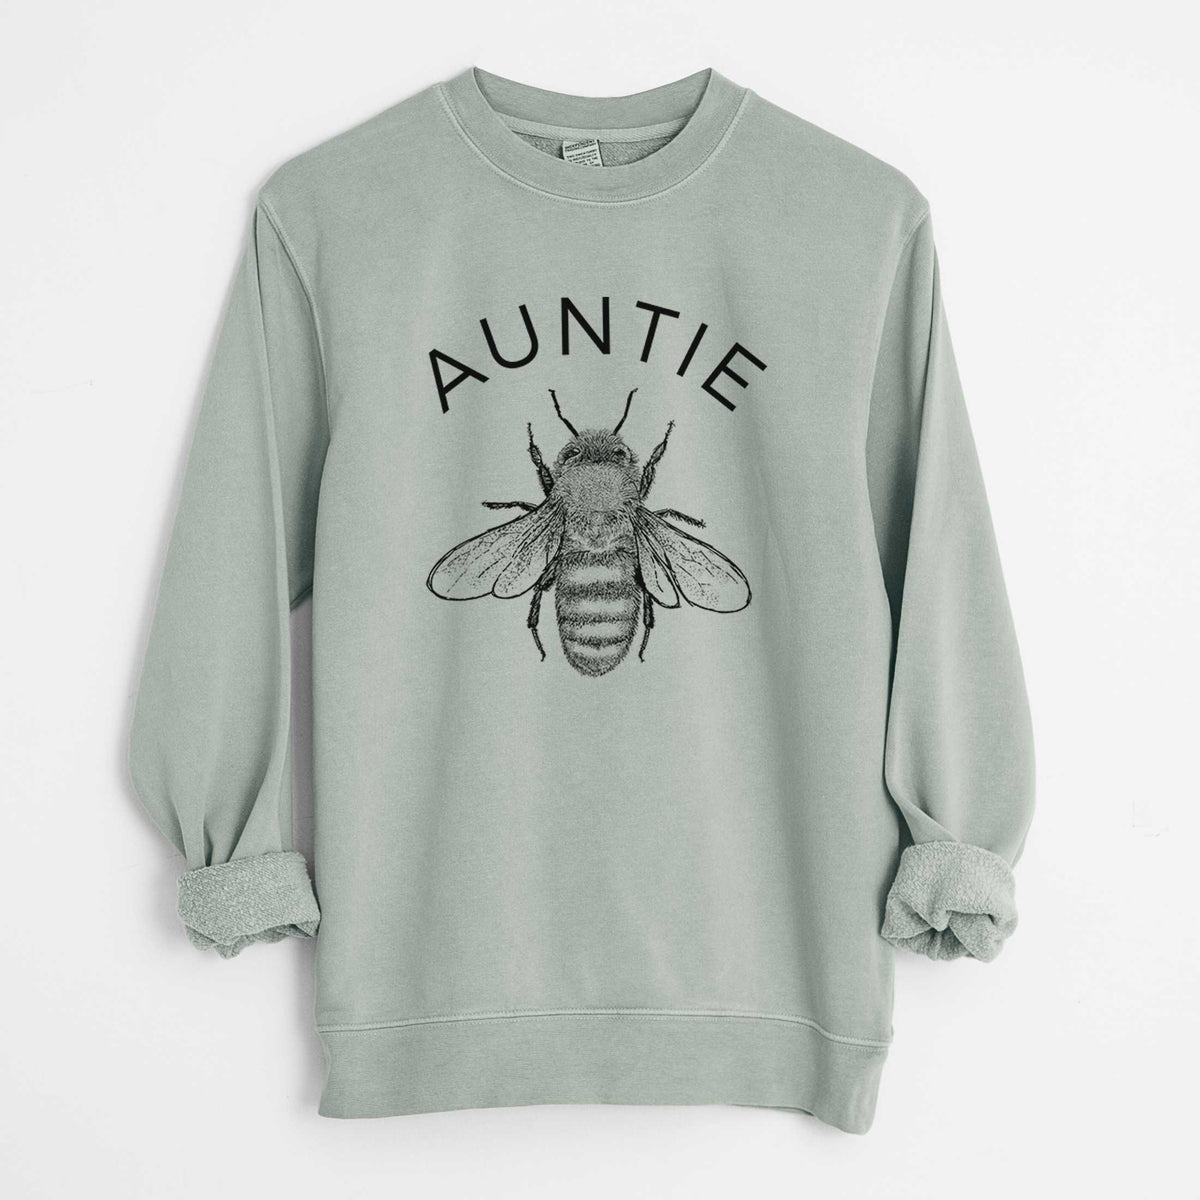 Auntie Bee - Unisex Pigment Dyed Crew Sweatshirt